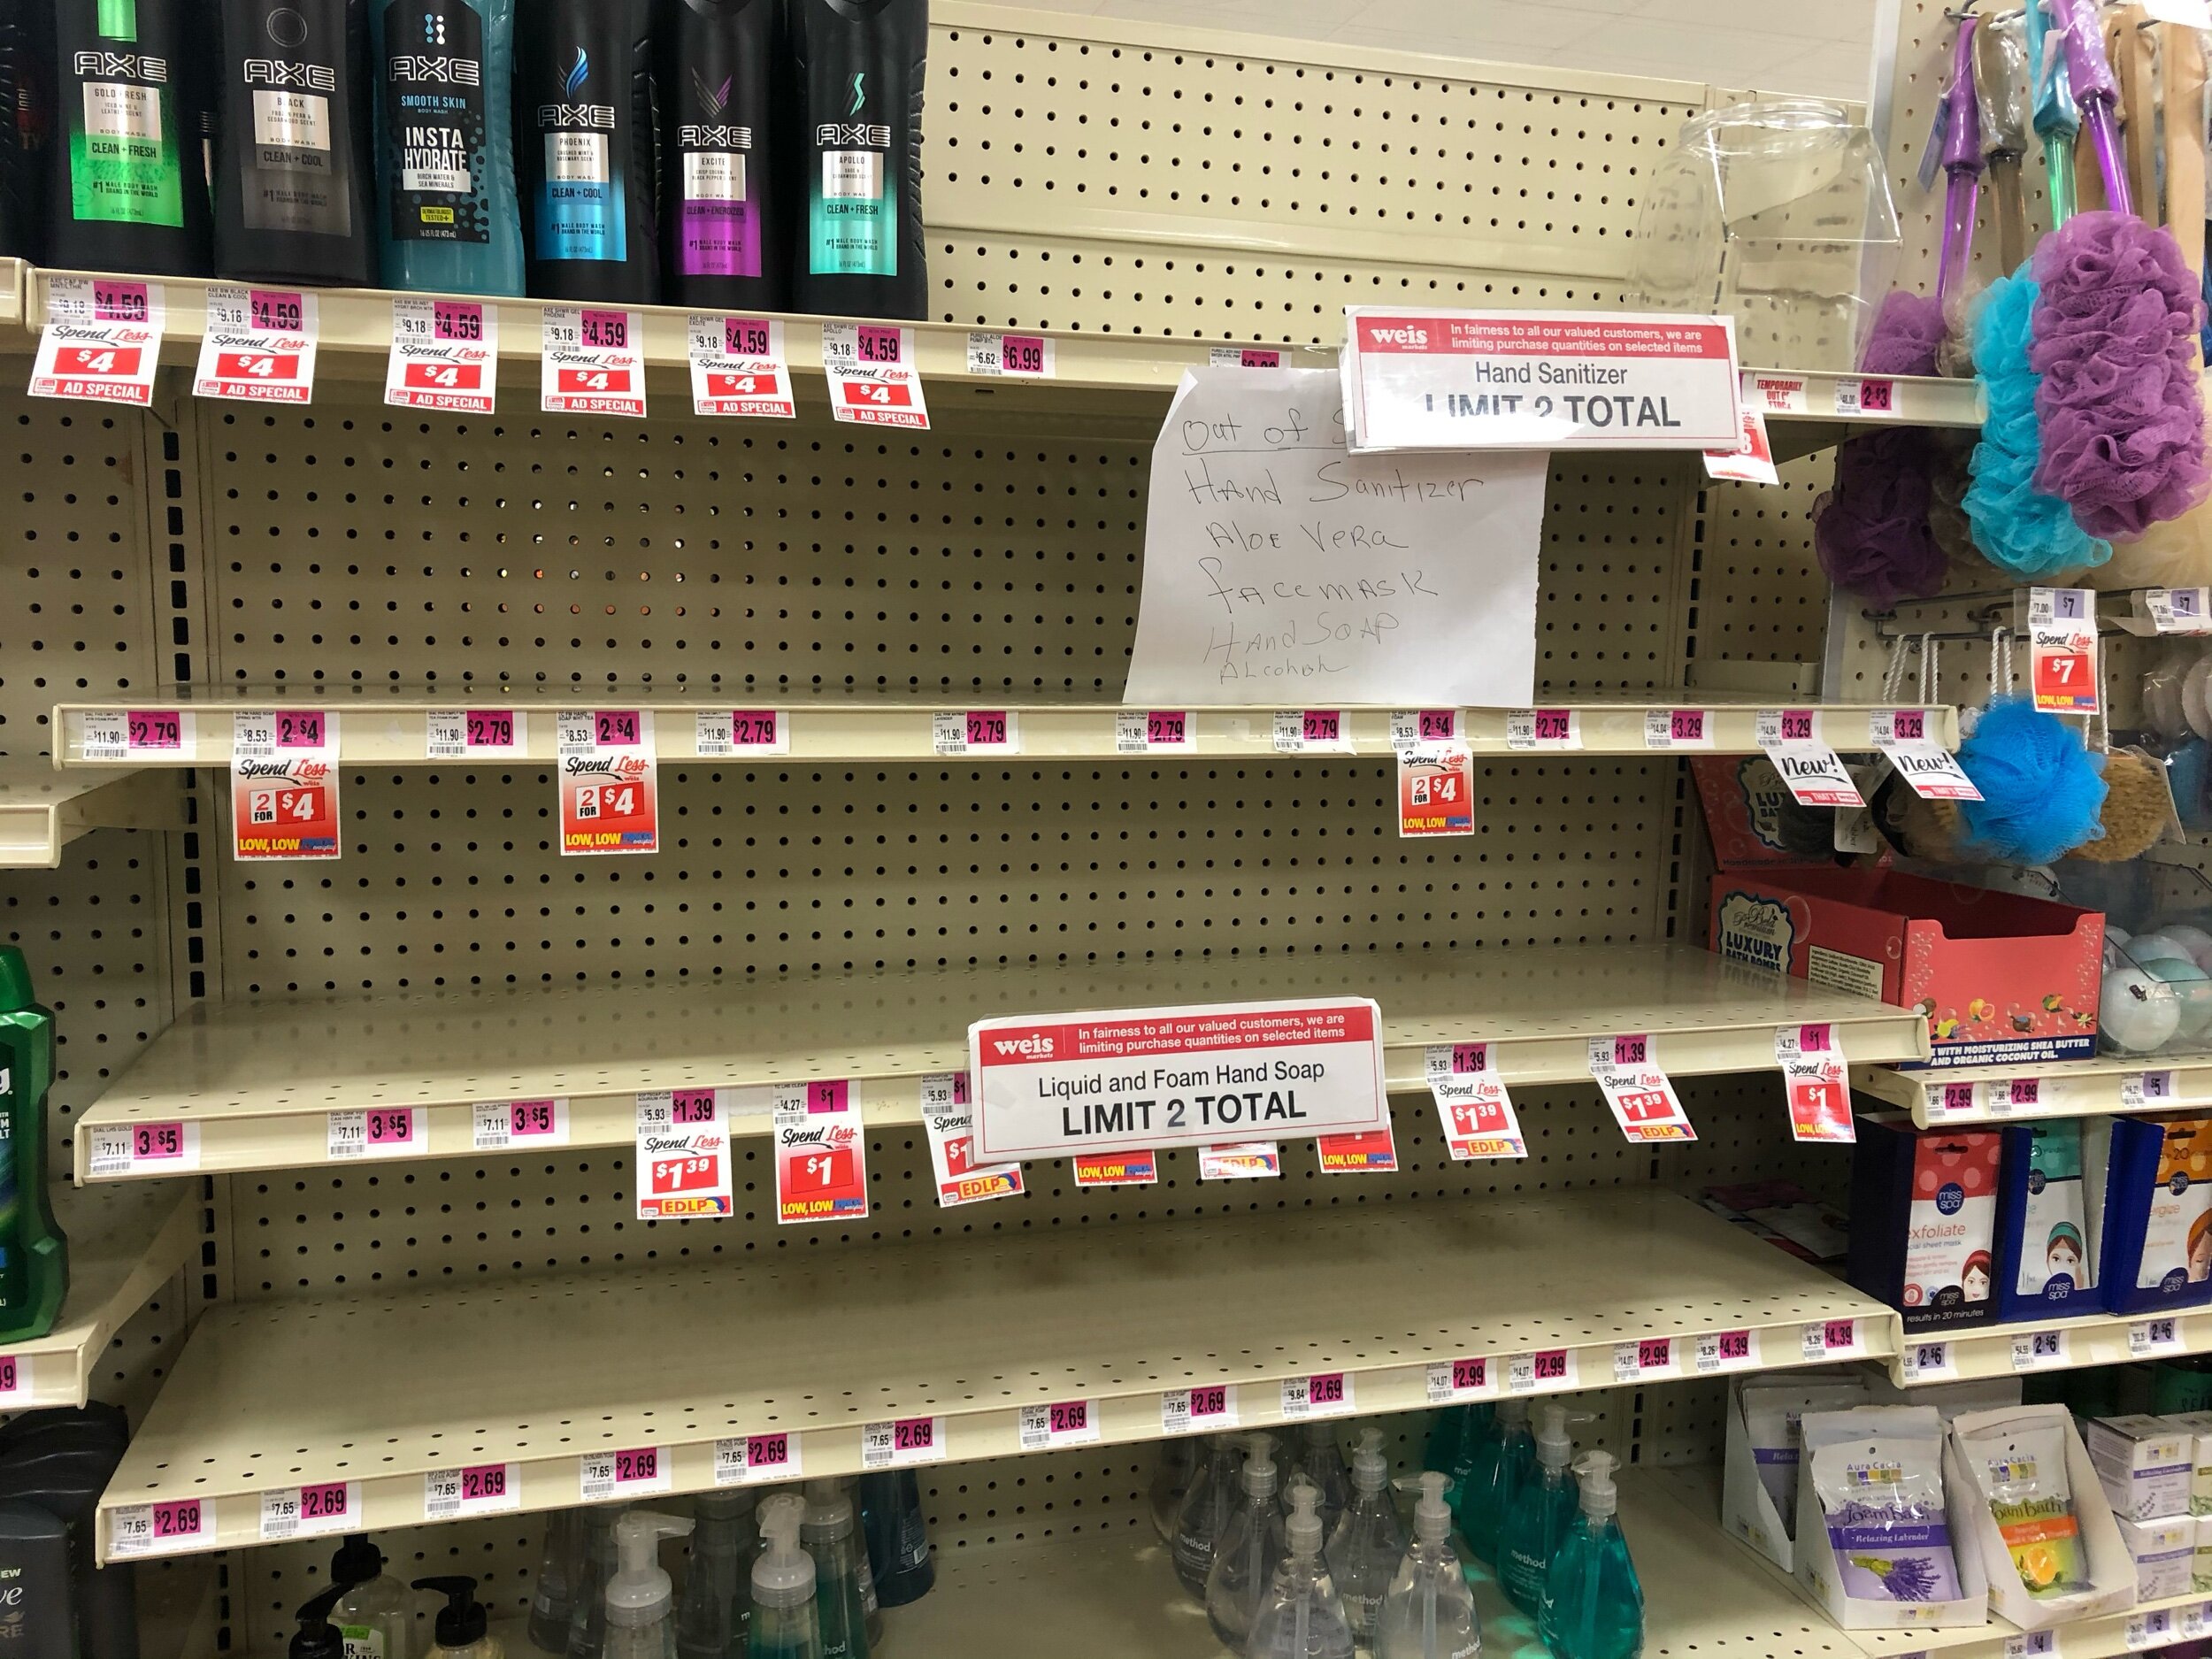 Sanitizer still not available.